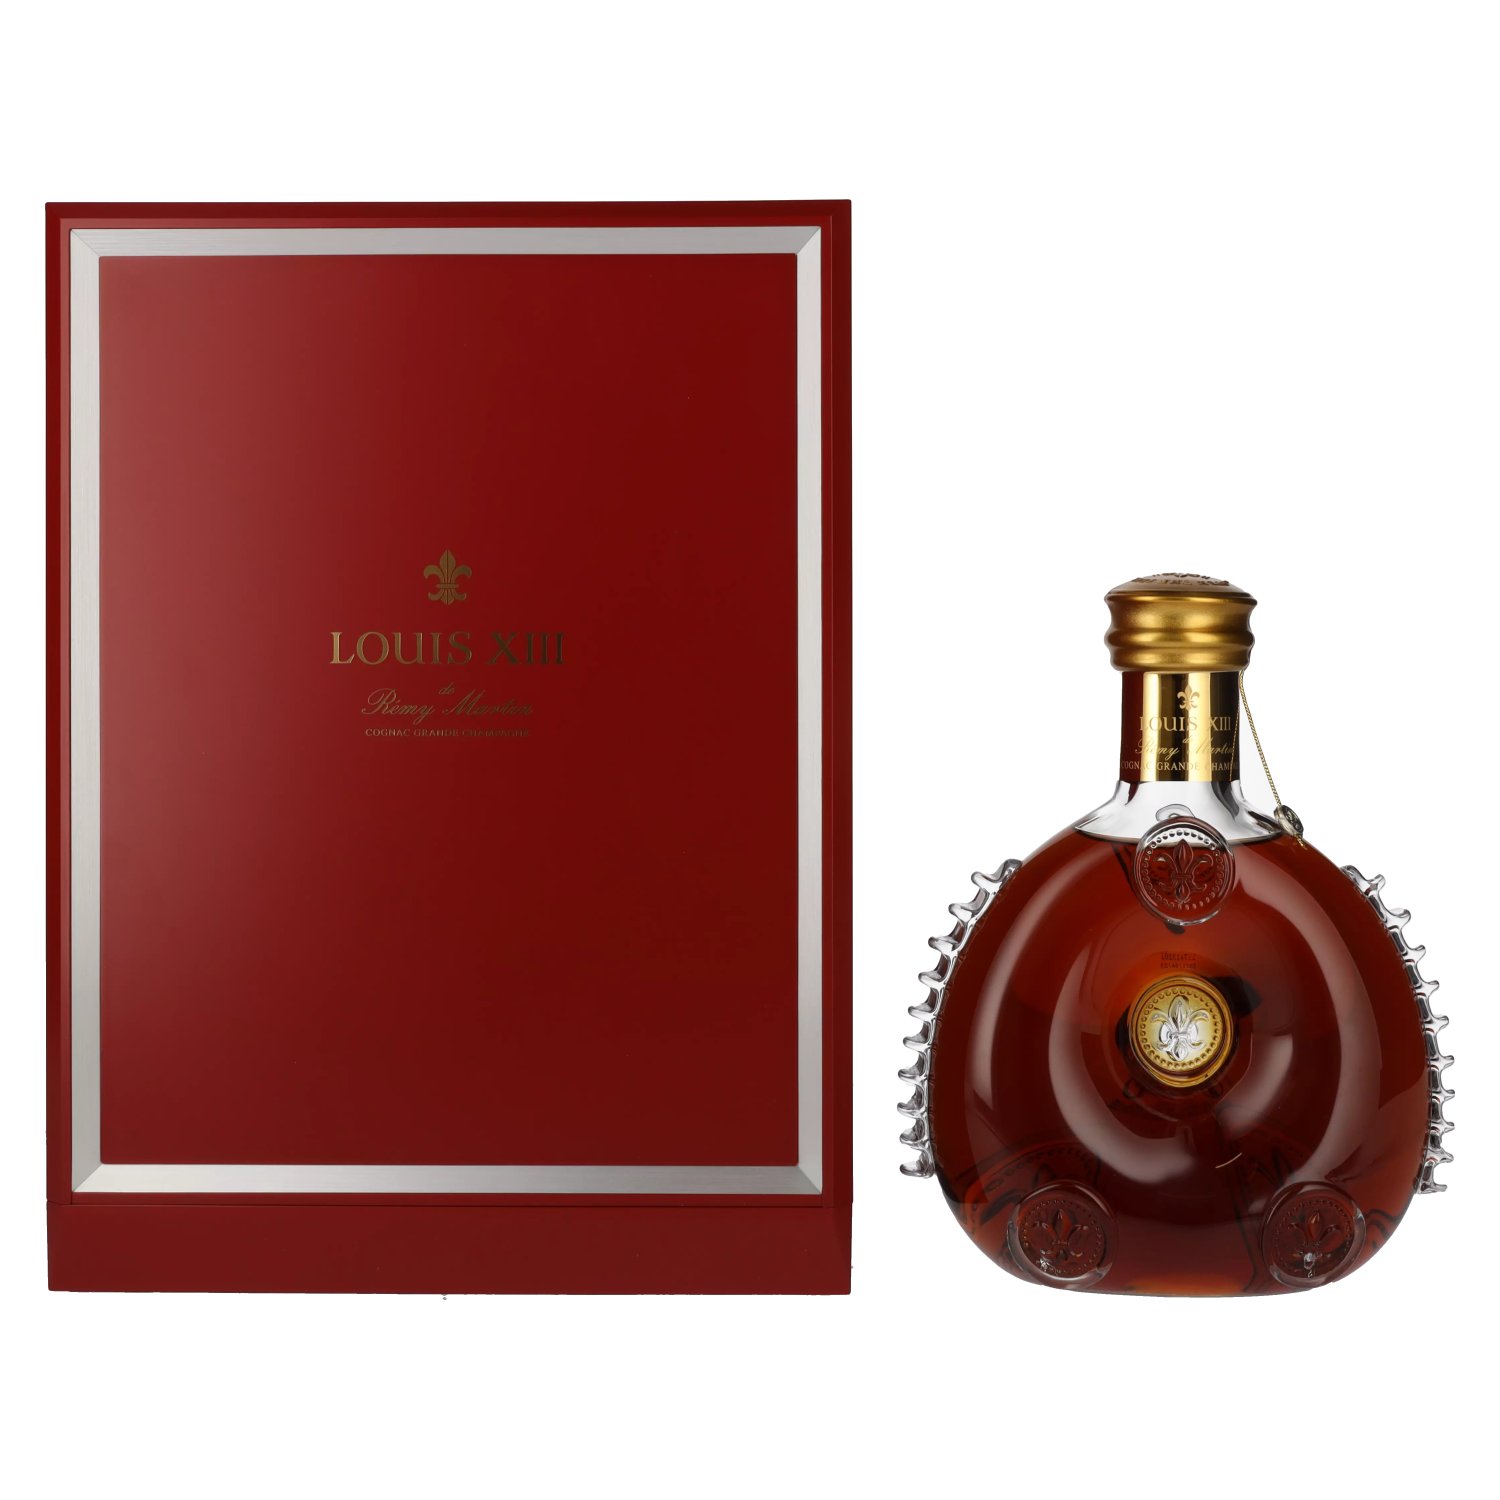 Where to buy Louis XIII de Remy Martin Black Pearl Grande Champagne Cognac